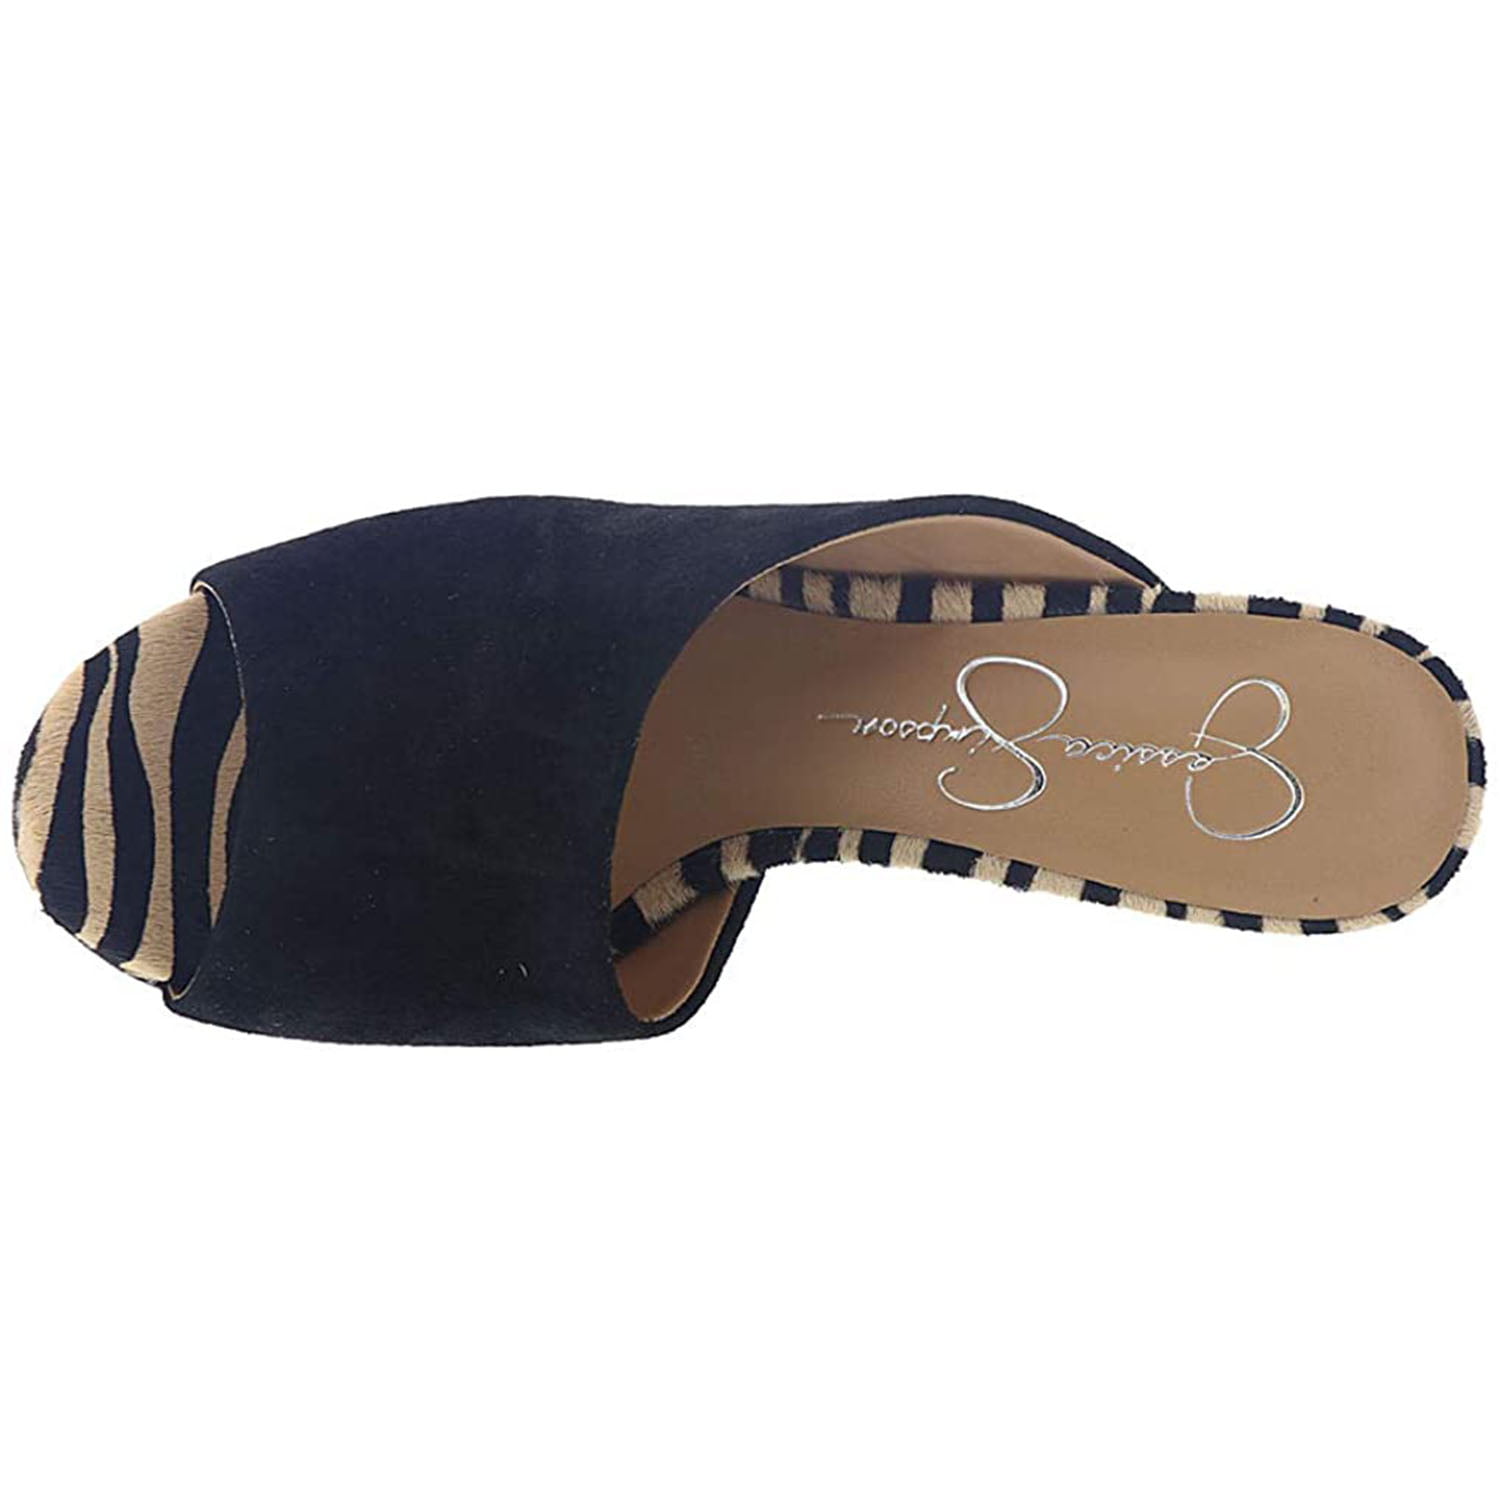 jessica simpson bryanne sandal